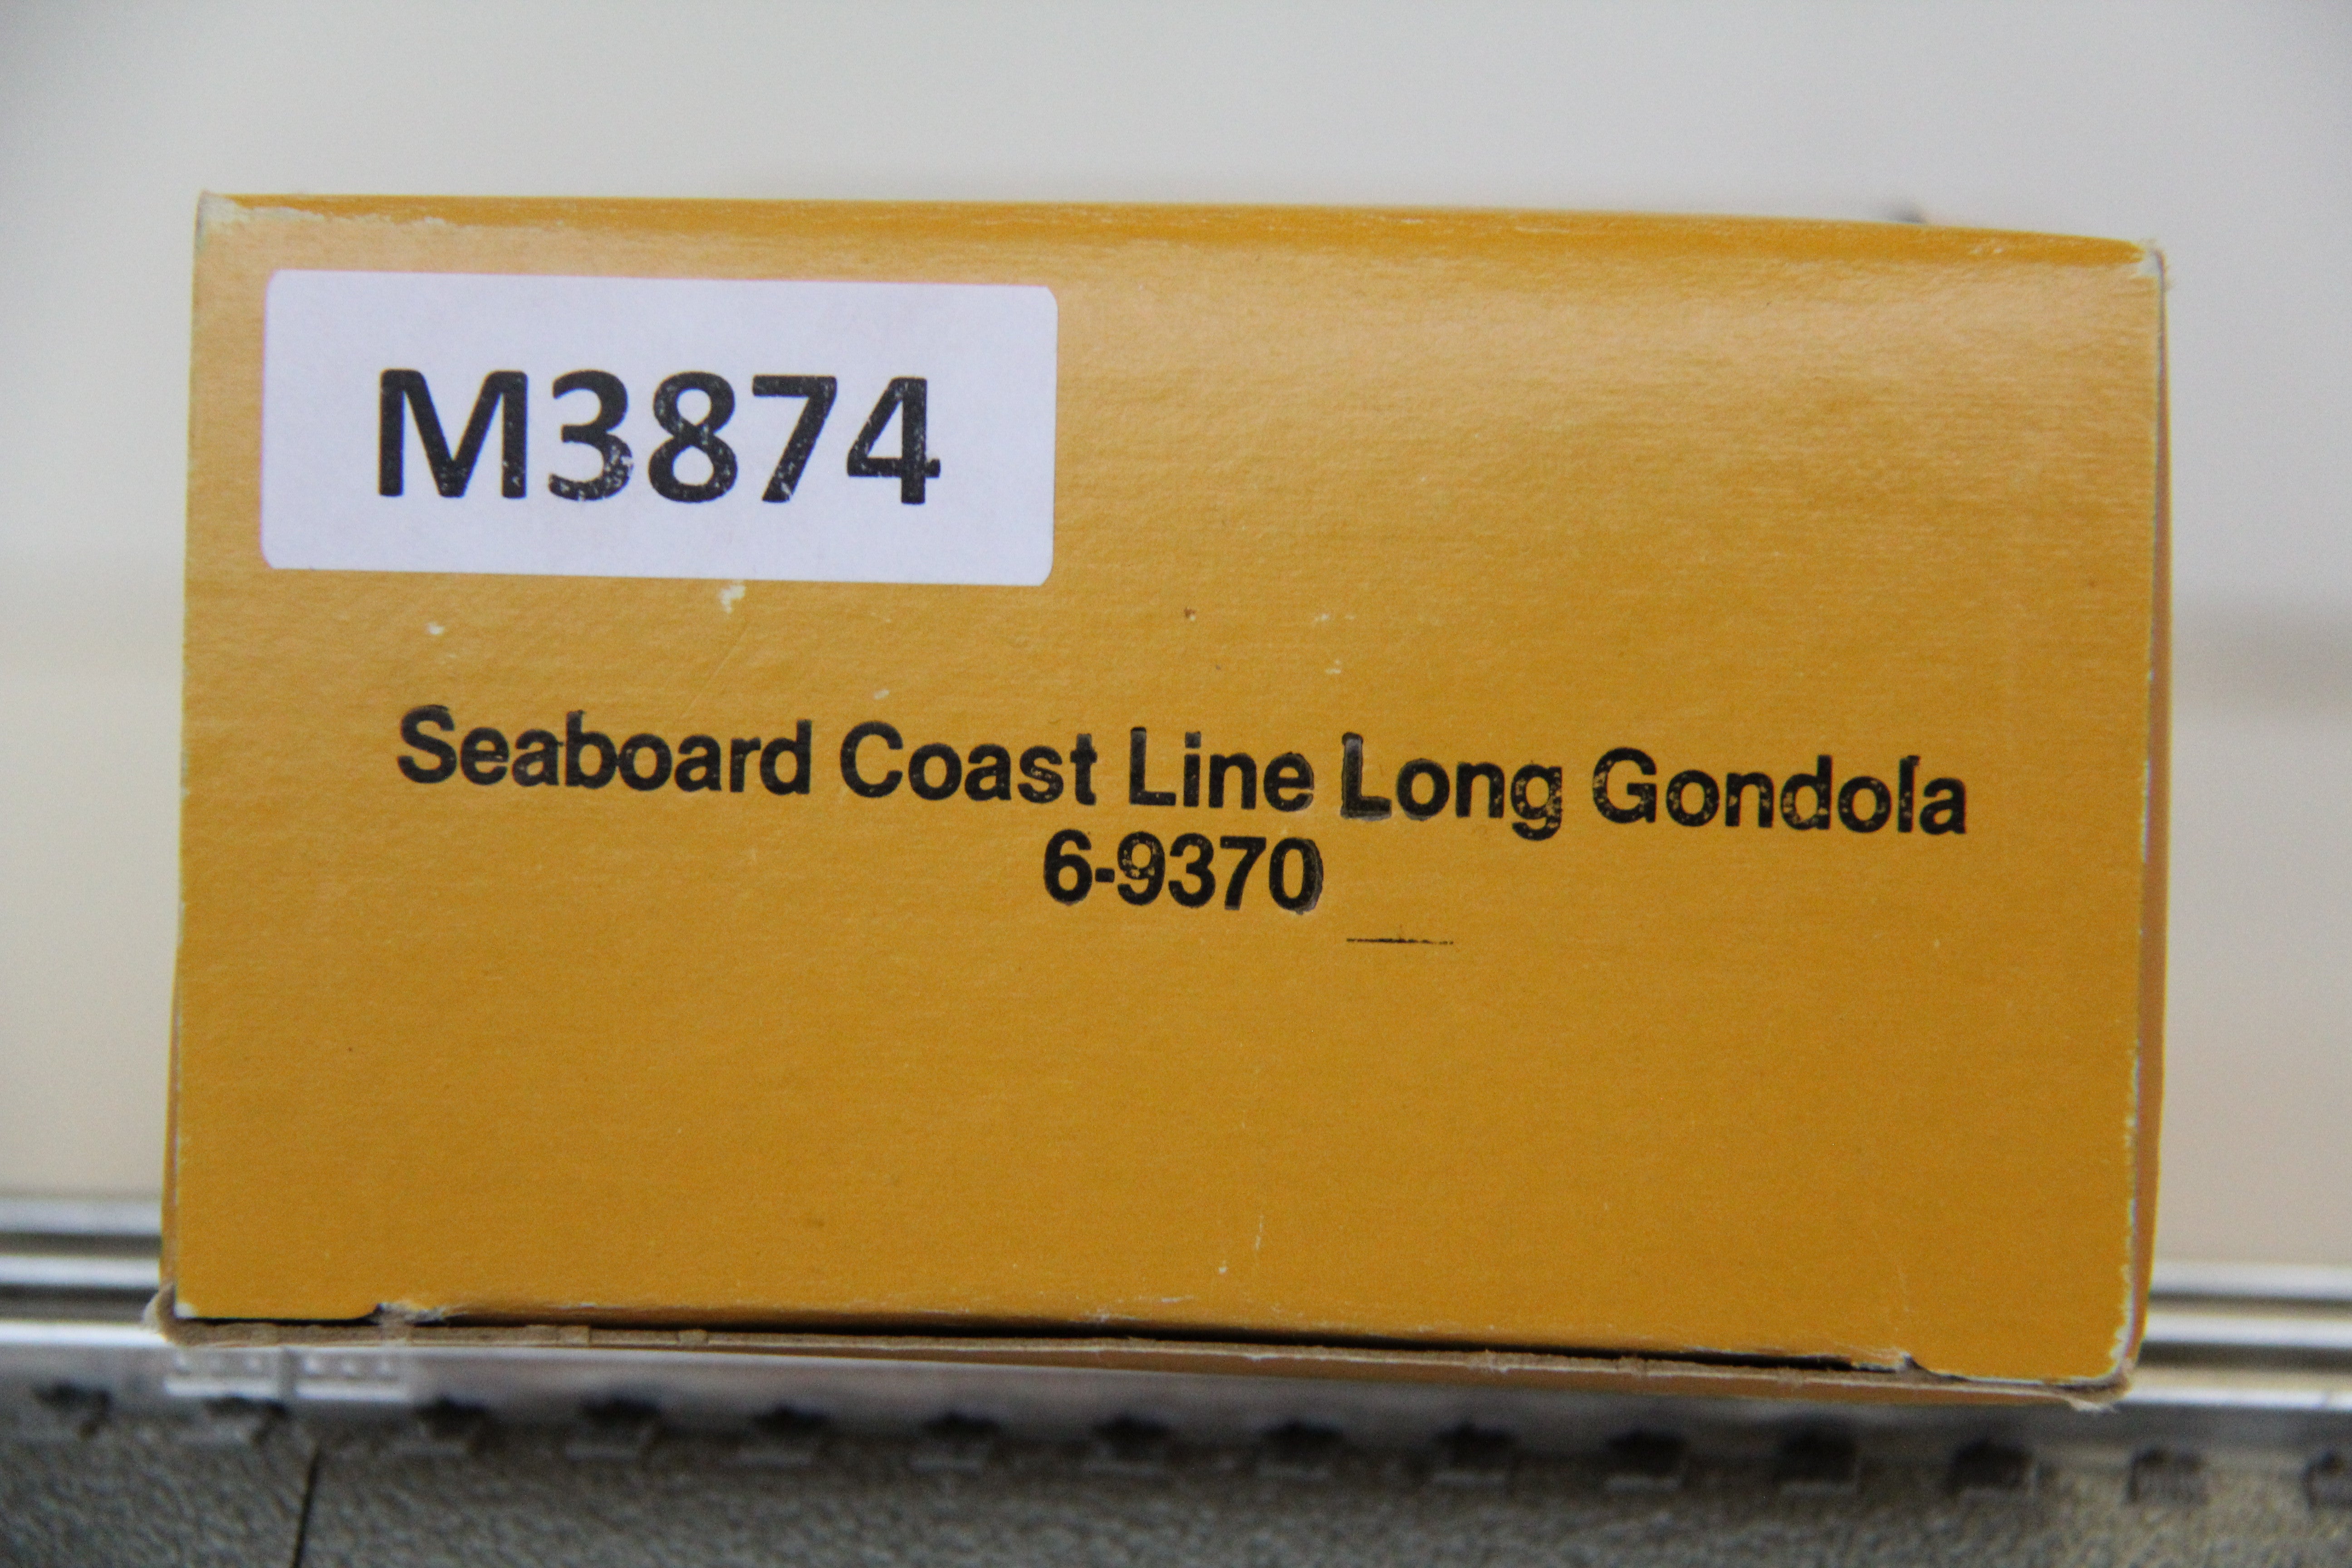 Lionel 6-9370 Seaboard Coast Line Long Gondola-Second hand-M3874